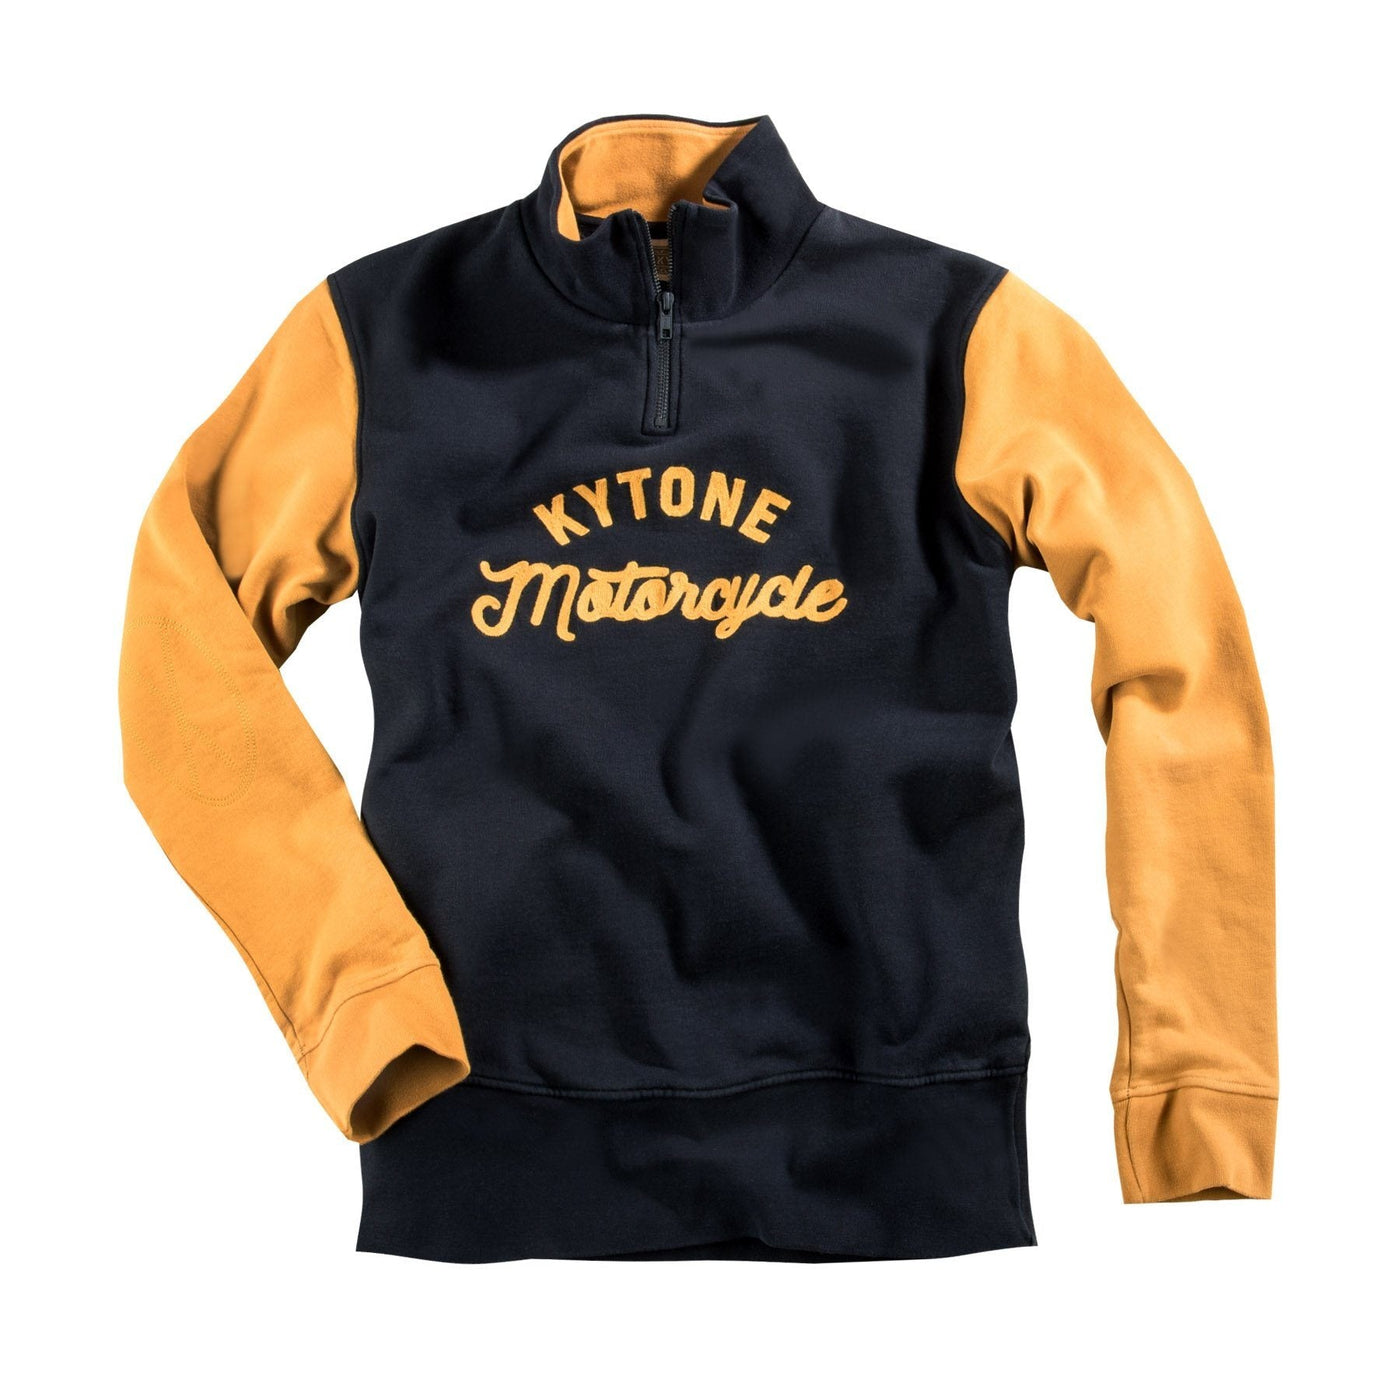 Kytone Sweater Racer Gold